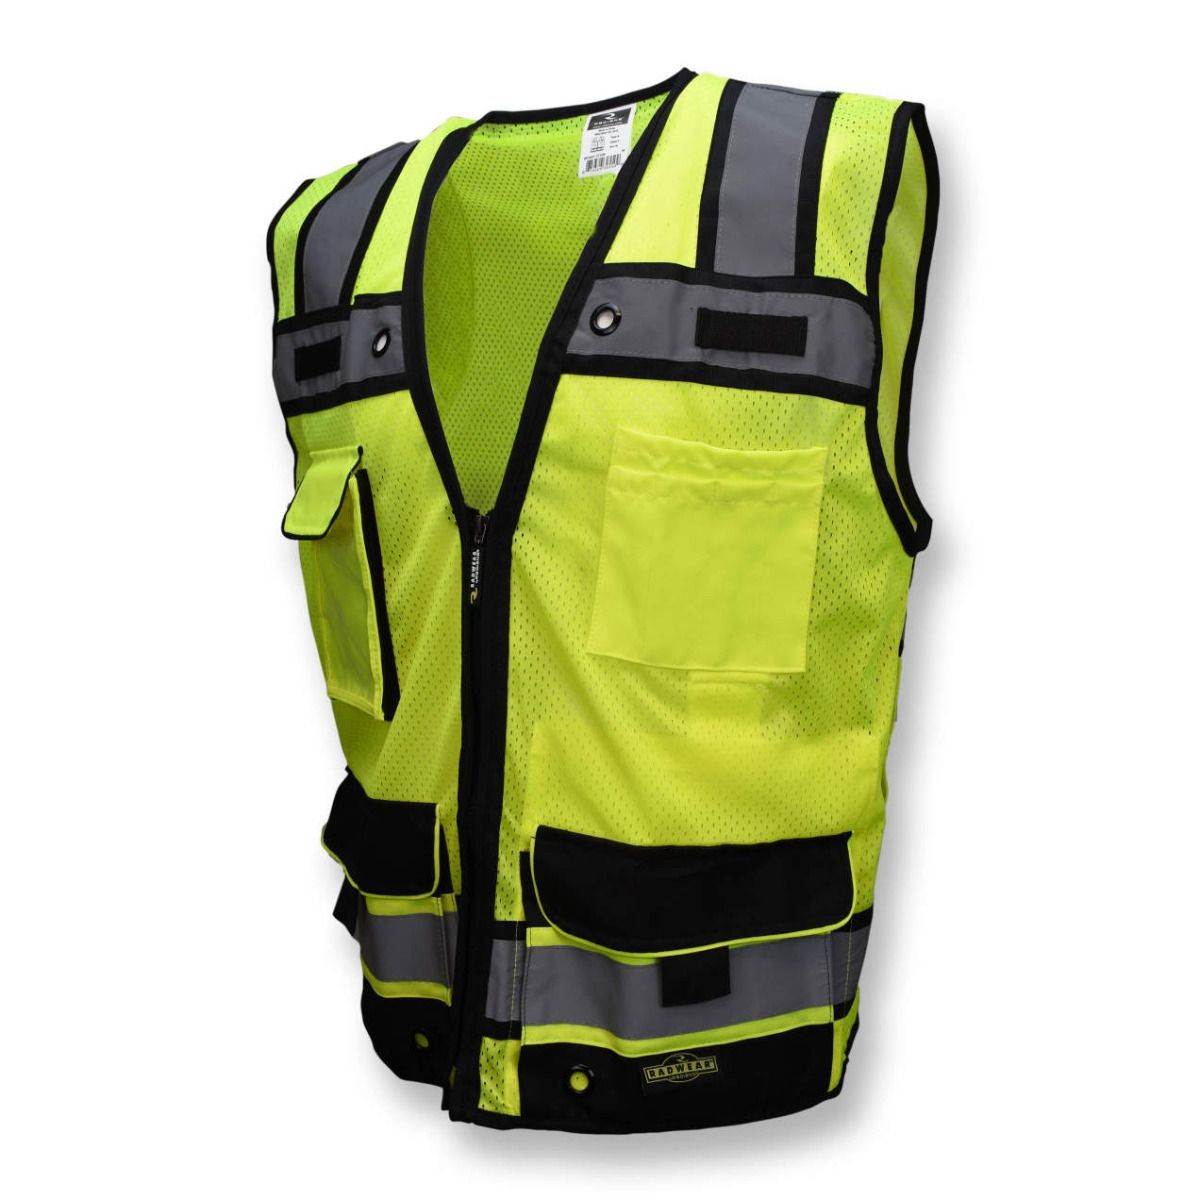 10 x safety vest puncture vest accident vest washable crease resistant neon yellow safety vest Safety vest KFZ EN 471 360 degree visibility Star-Line®